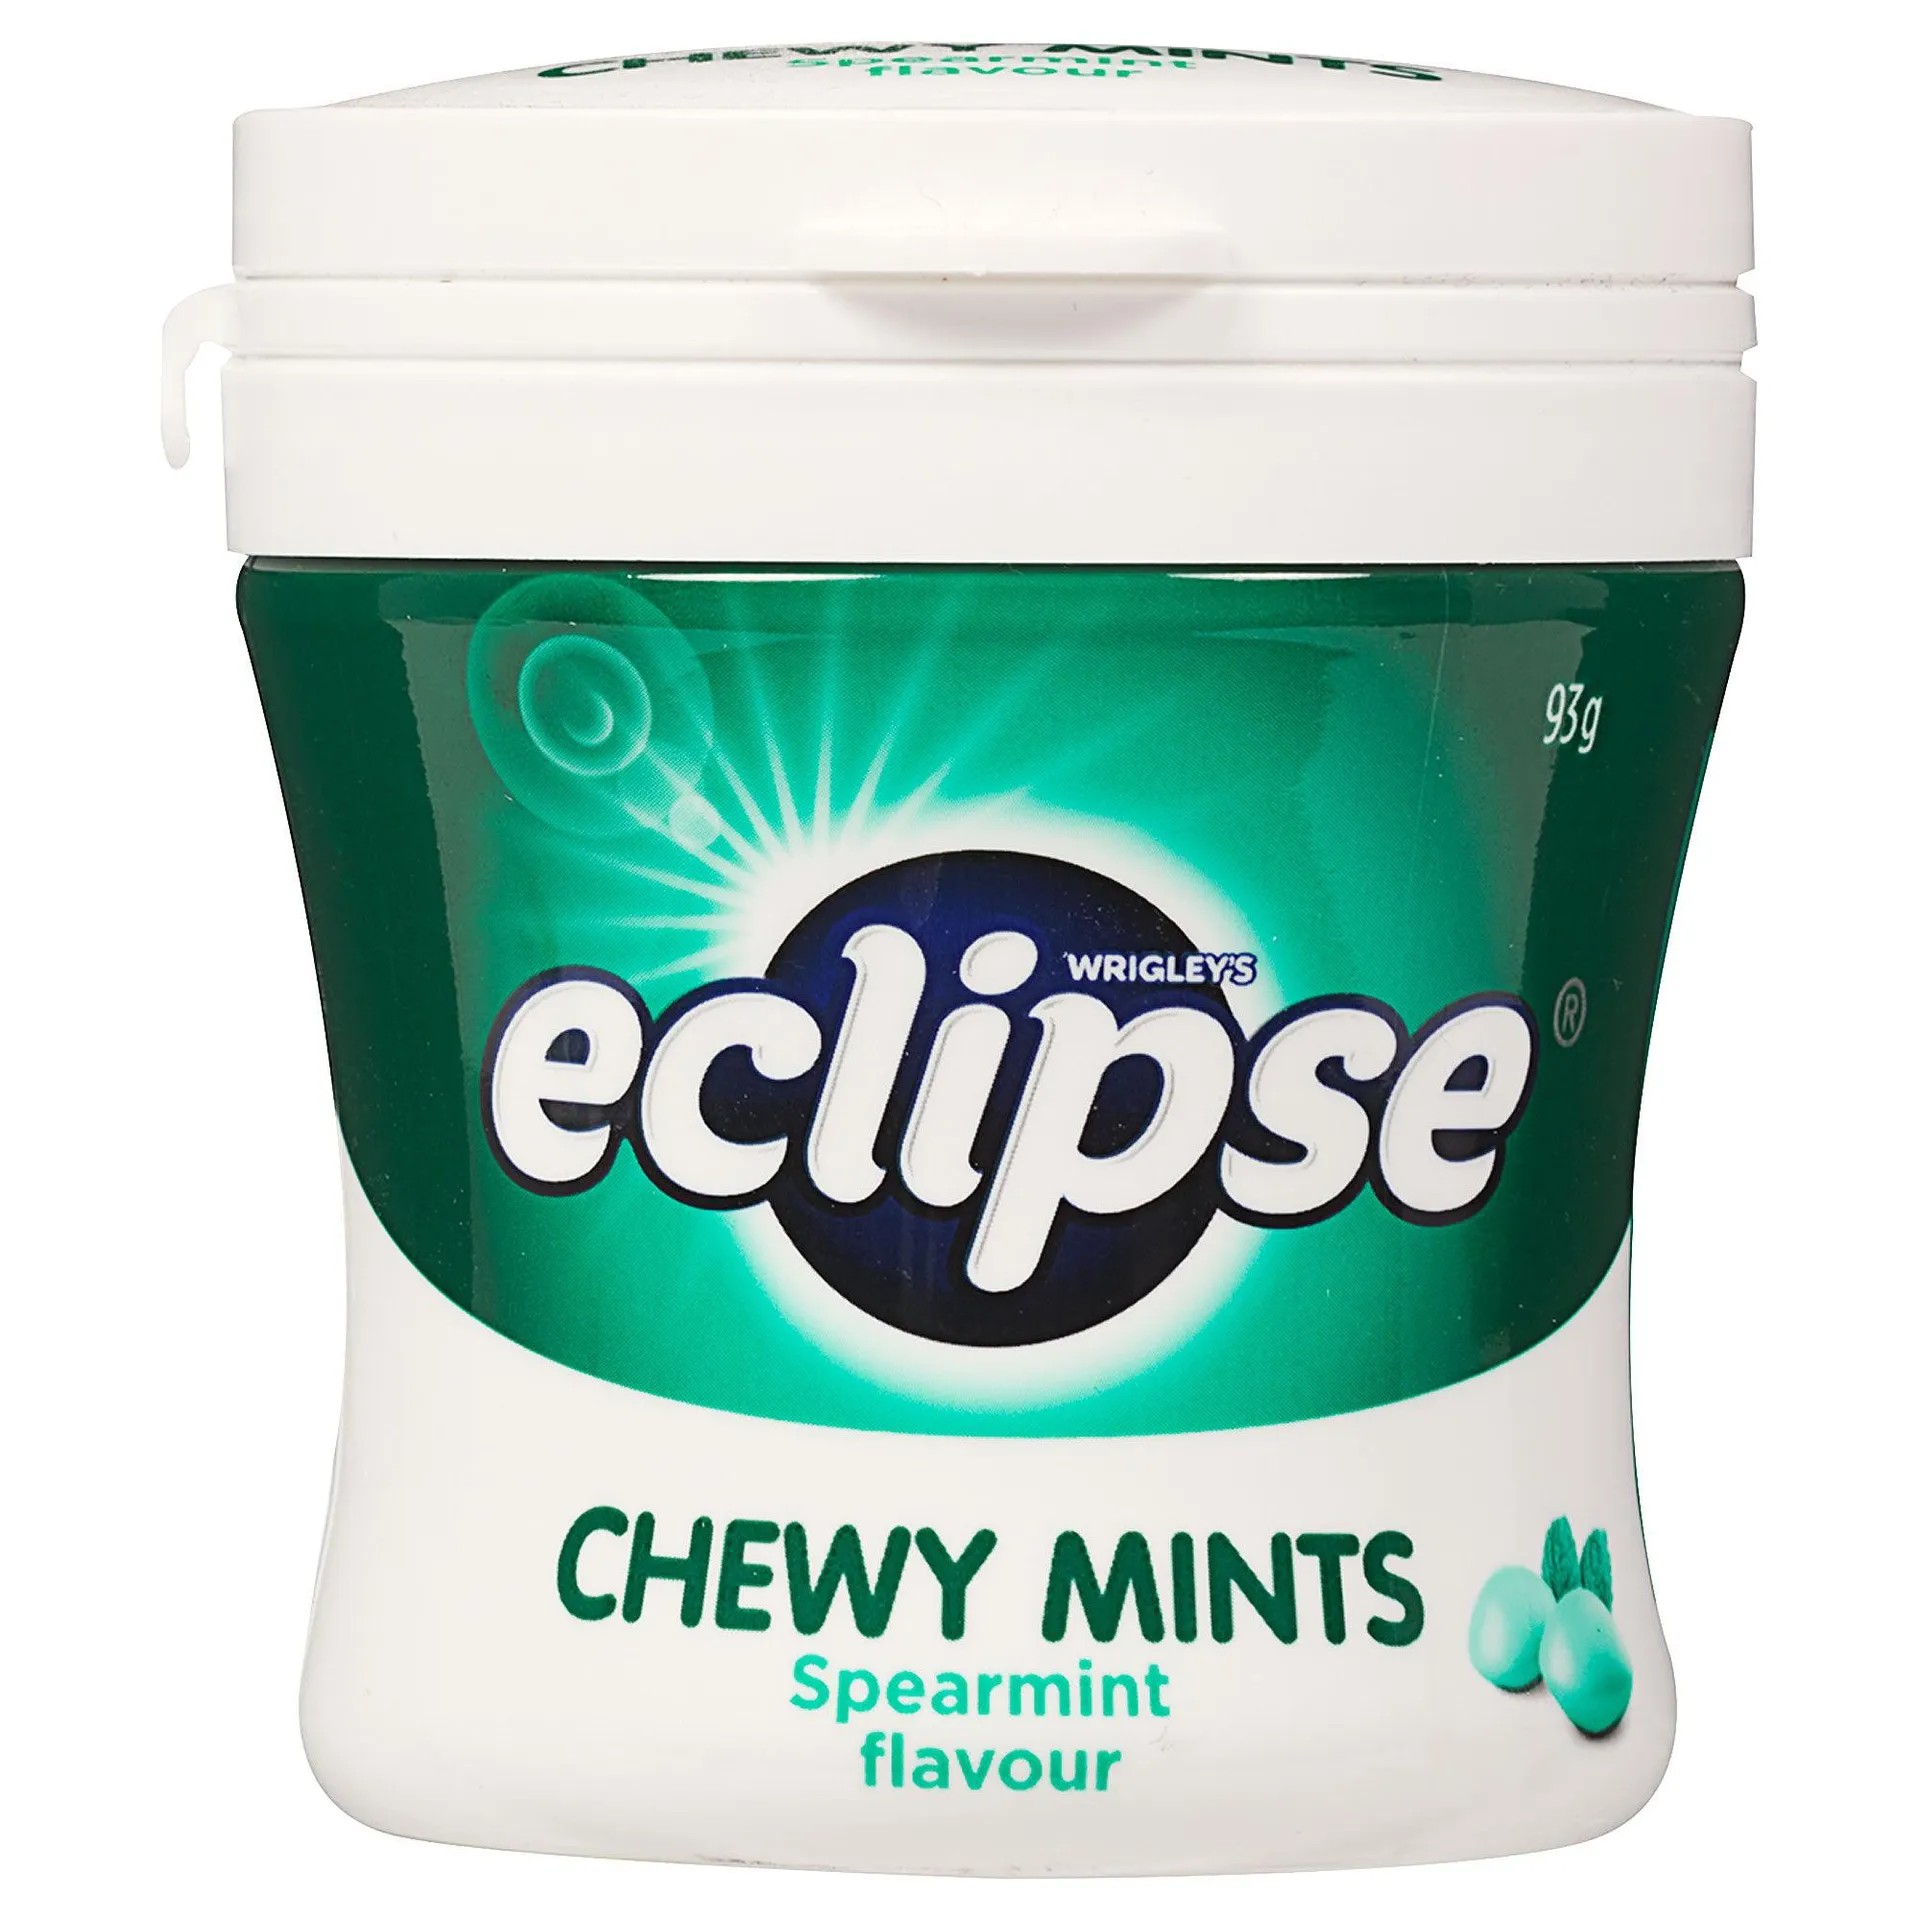 Eclipse Spearmint Chewy Mints 93g